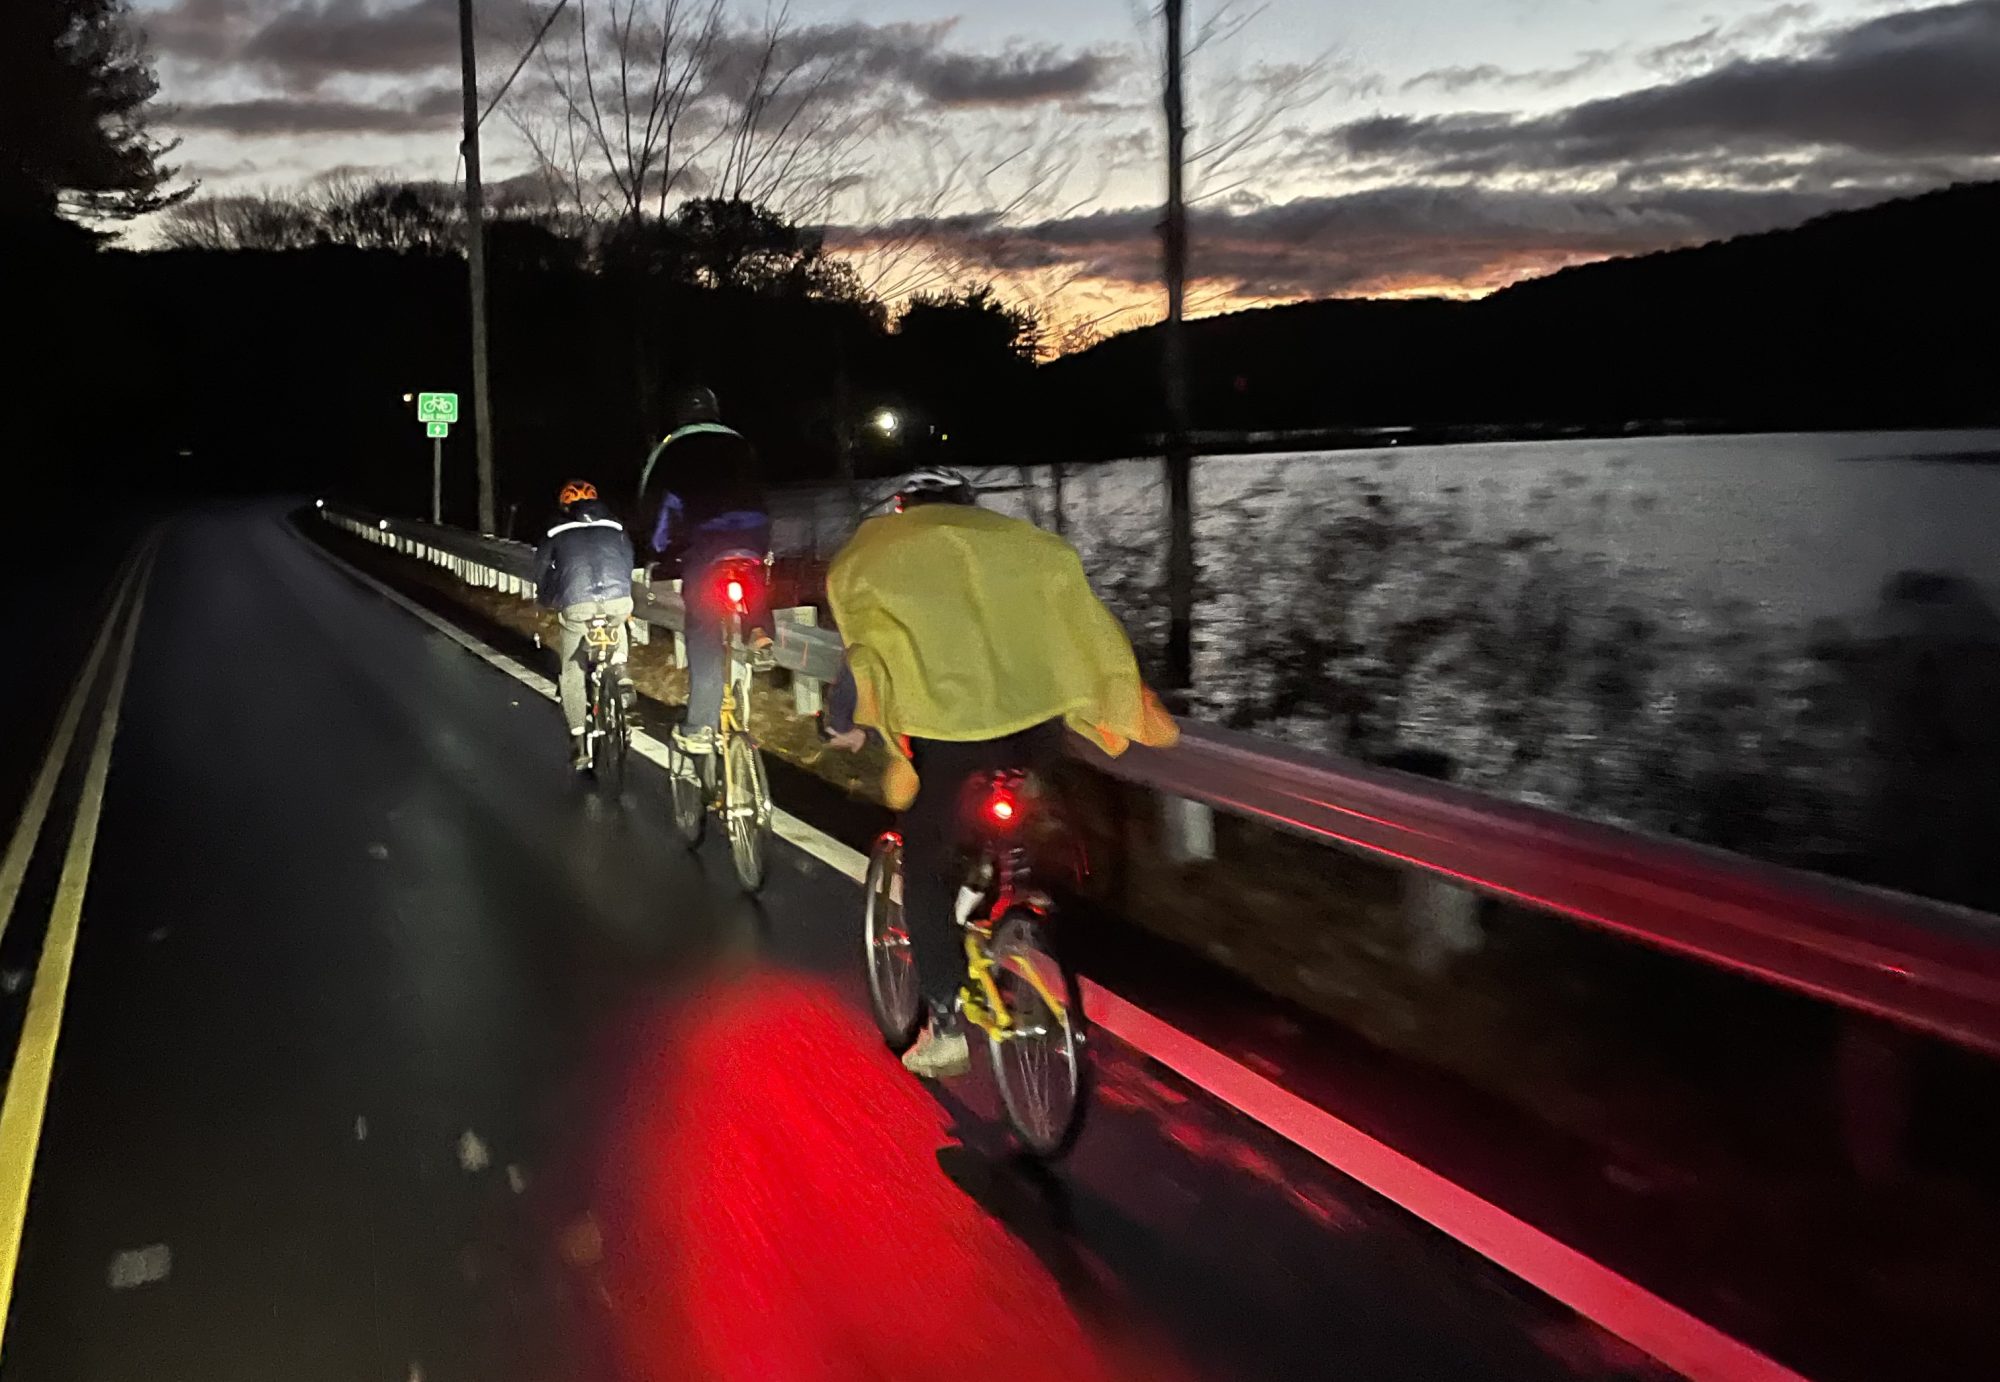 FULL MOON ADVENTURE WEREWOLF BIKE RIDE – Night Riding, Gravel Gliding and Bike Camping New Jersey since 2010